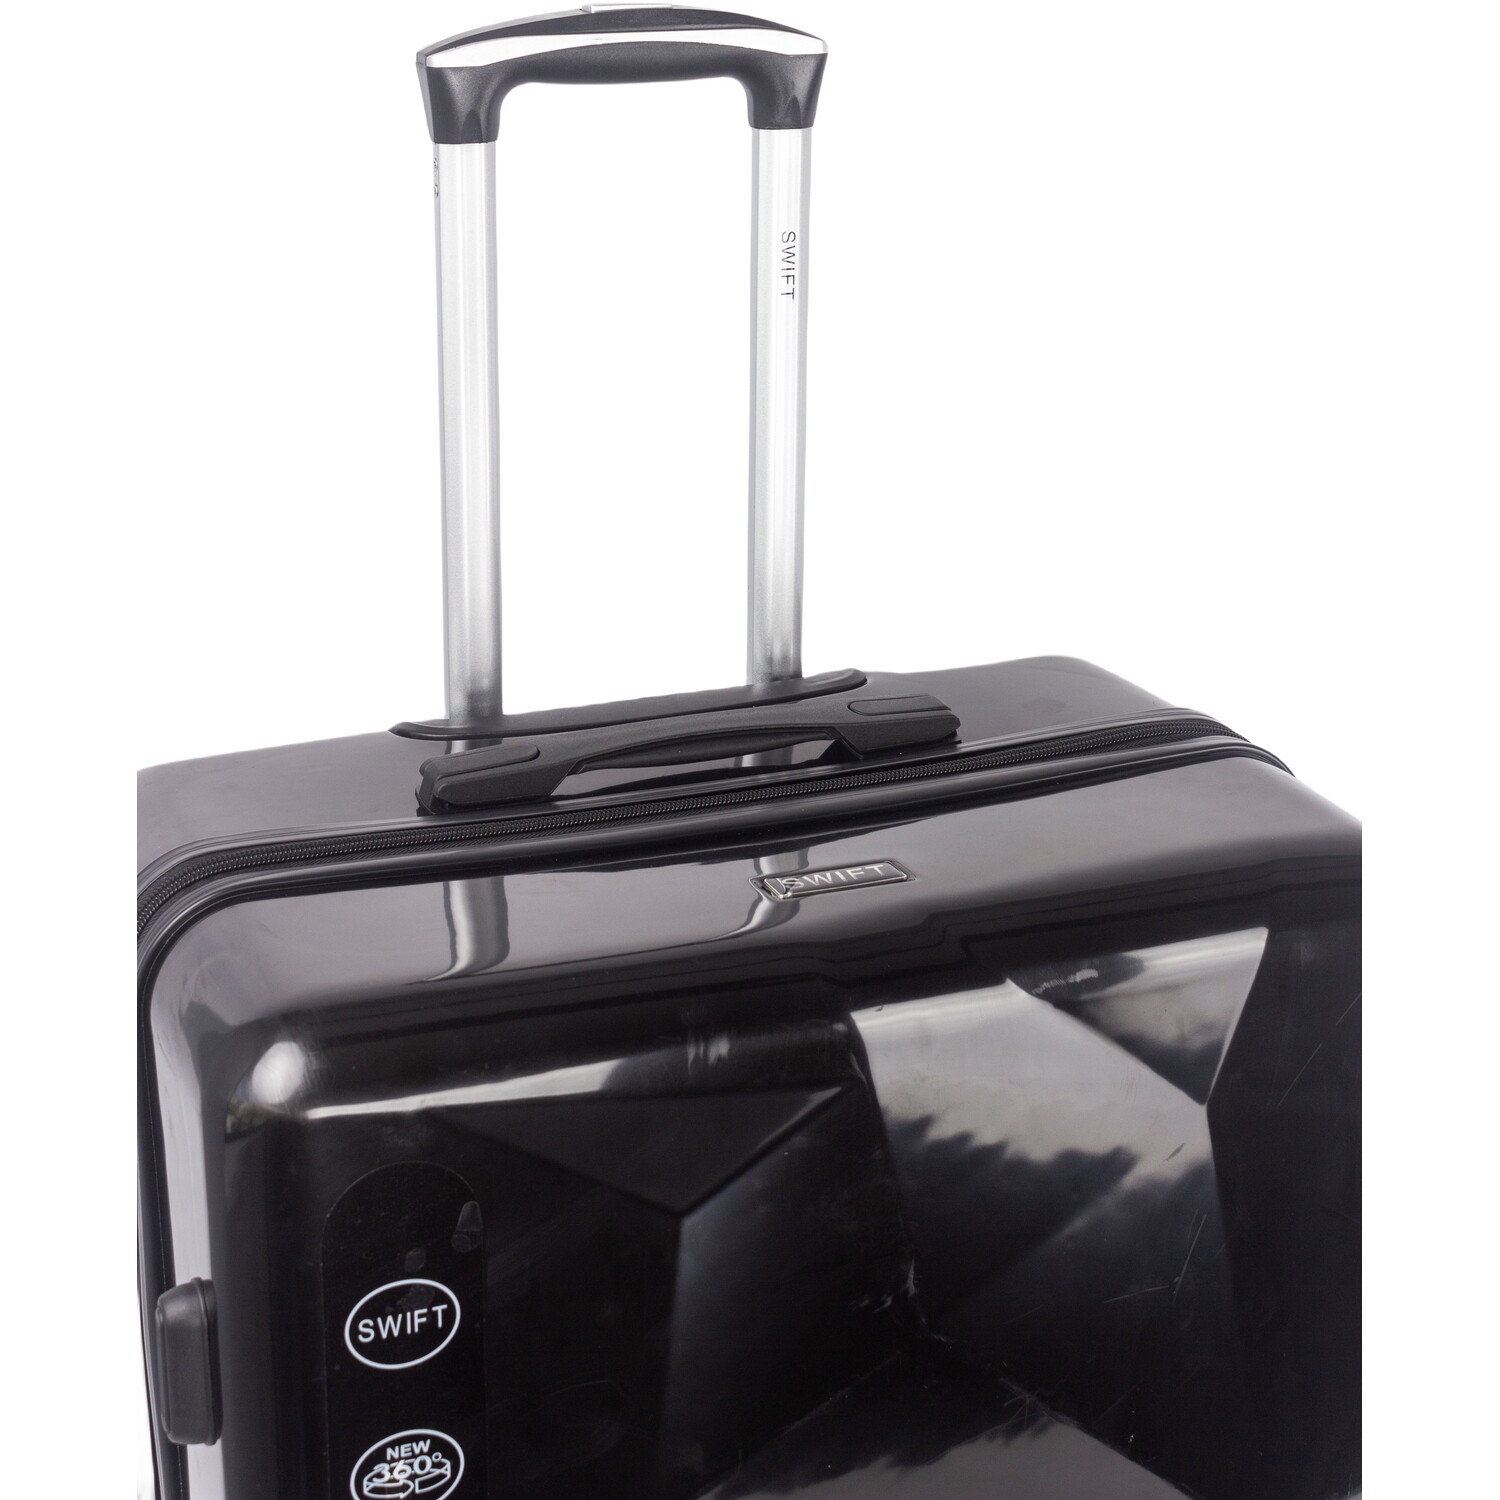 Swift Comet Suitcase - Black / Large Case Image 3